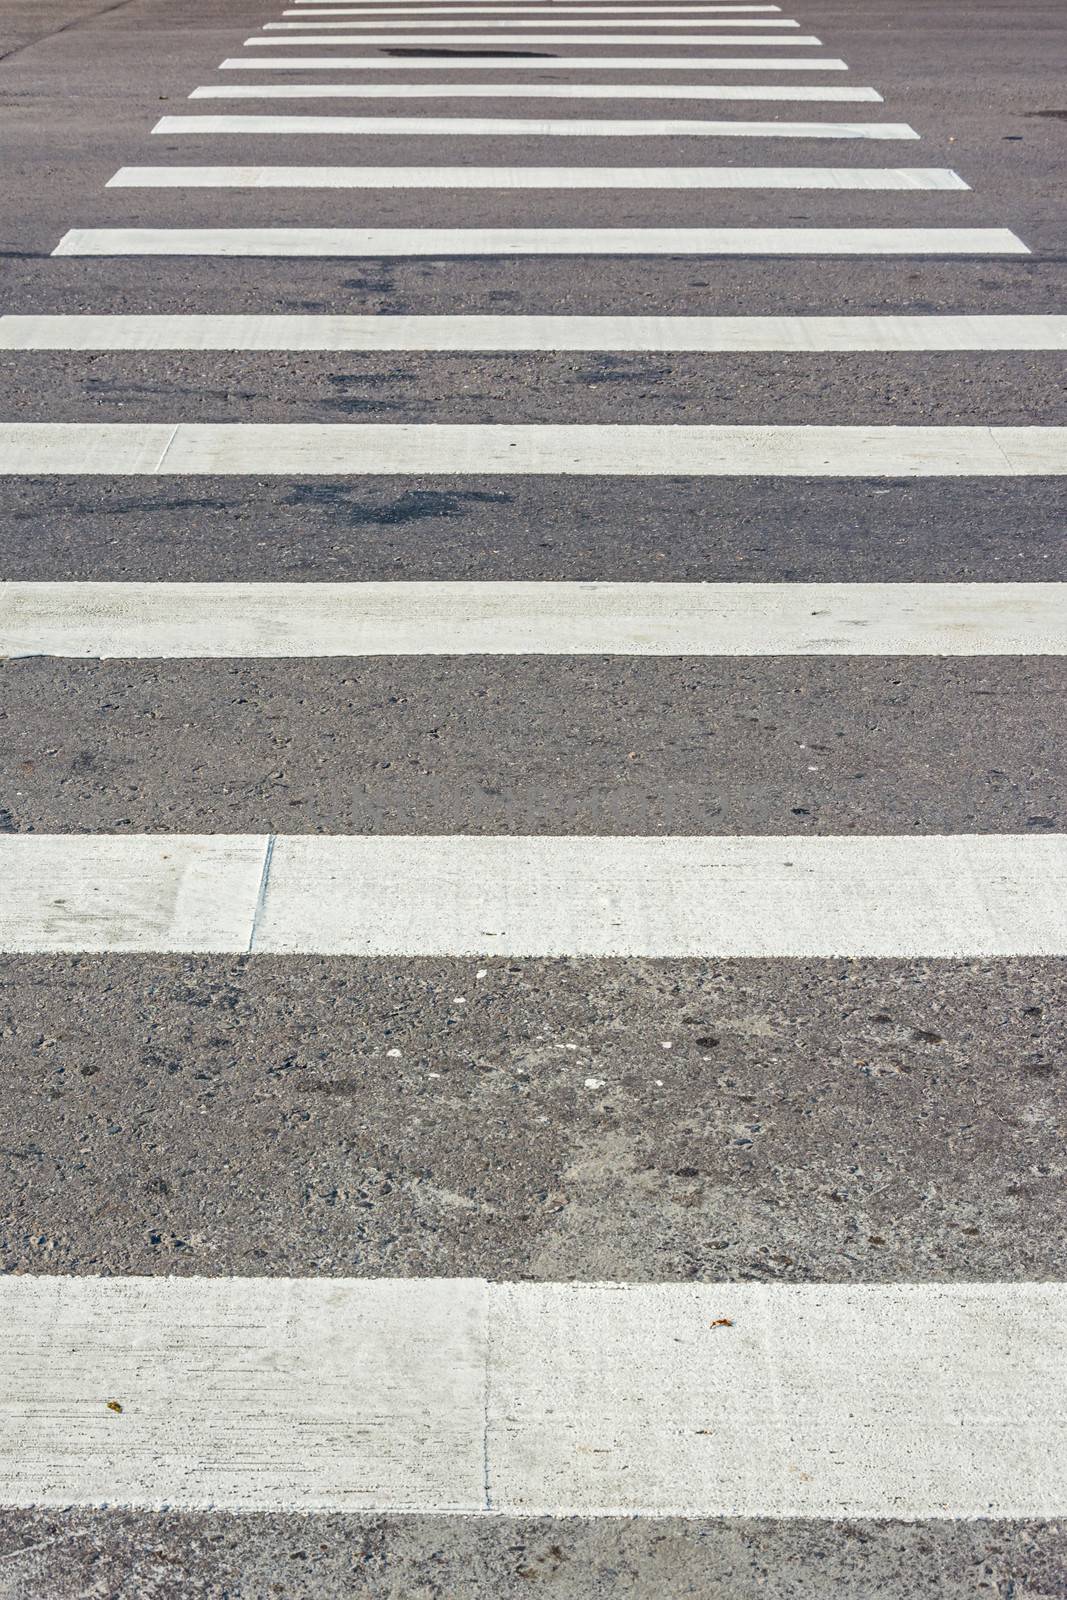 Zebra pedestrian crossing by elwynn